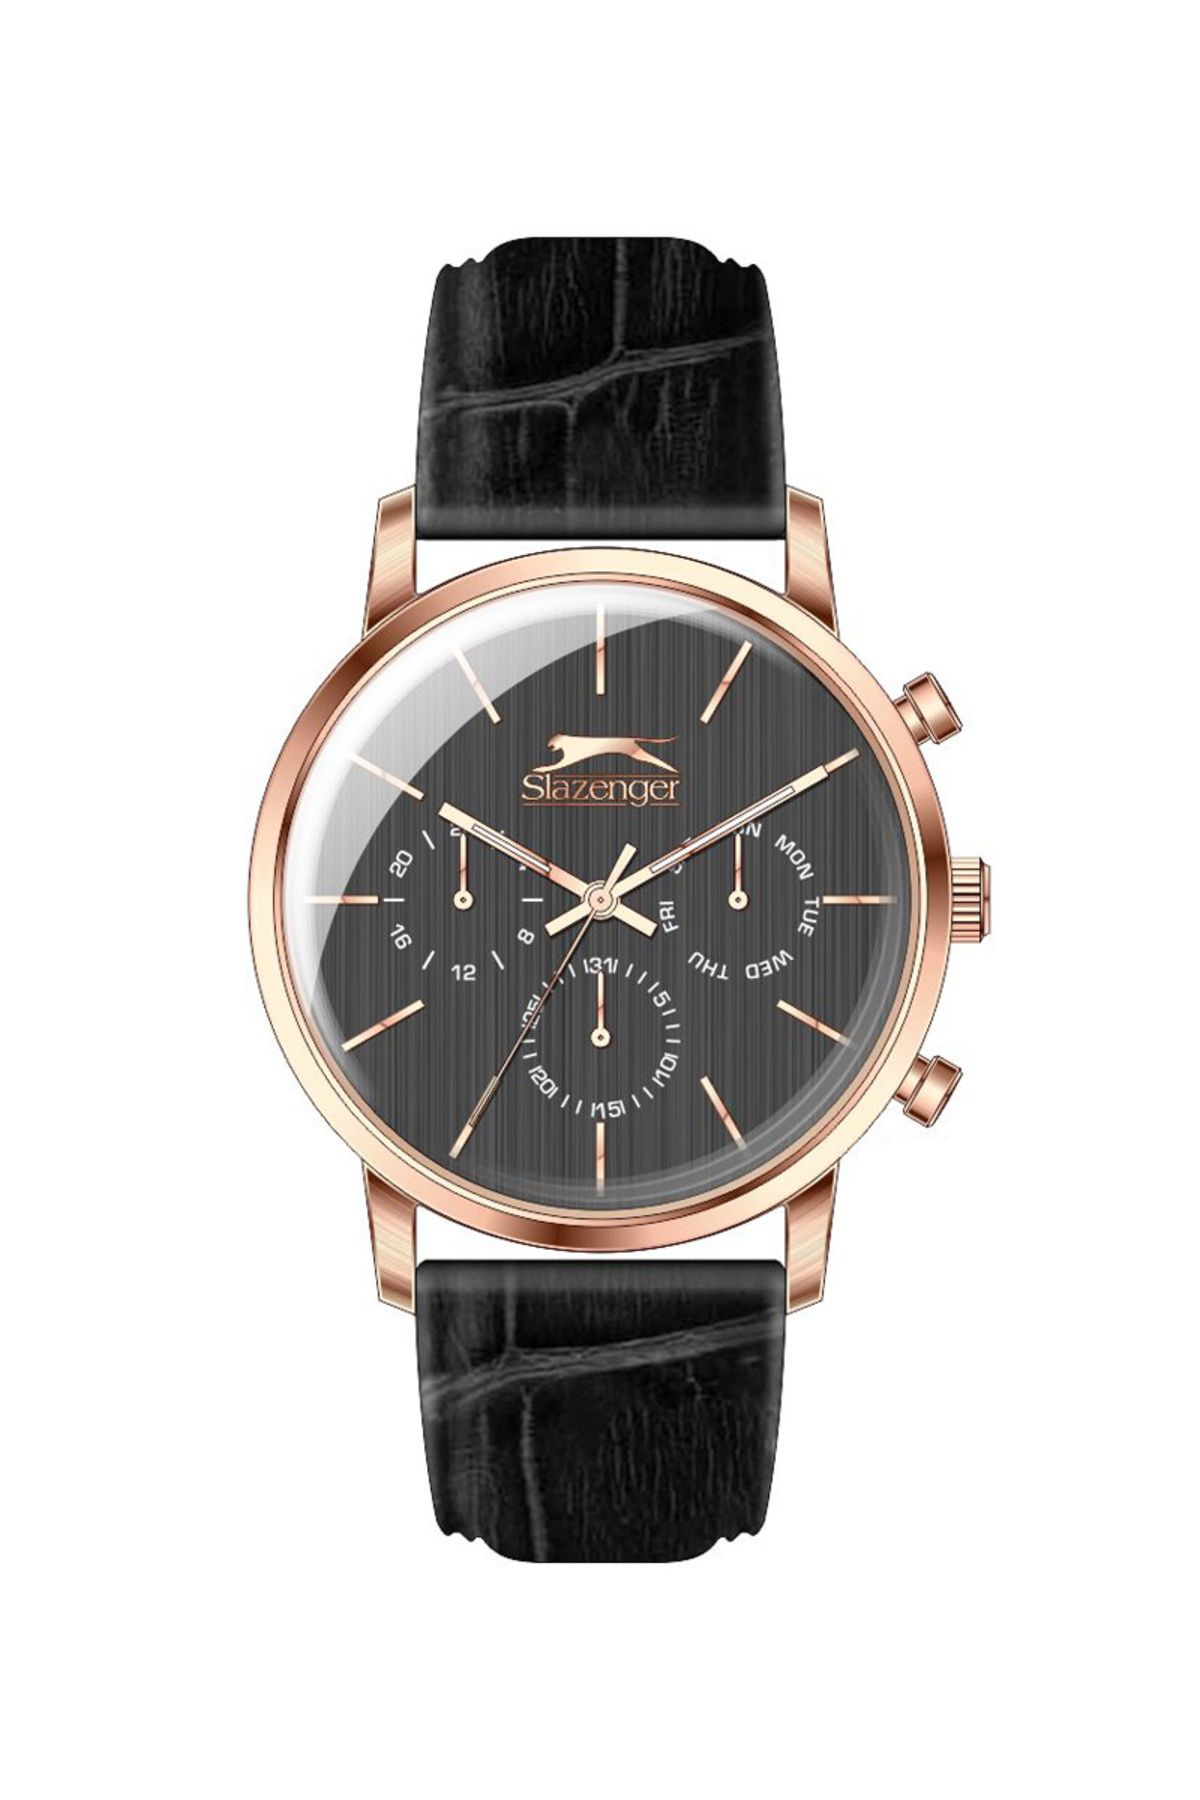 Slazenger SL. 9.6198.2.01 Men's Chronograph Watch (Black): Buy Online at  Best Price in UAE - Amazon.ae